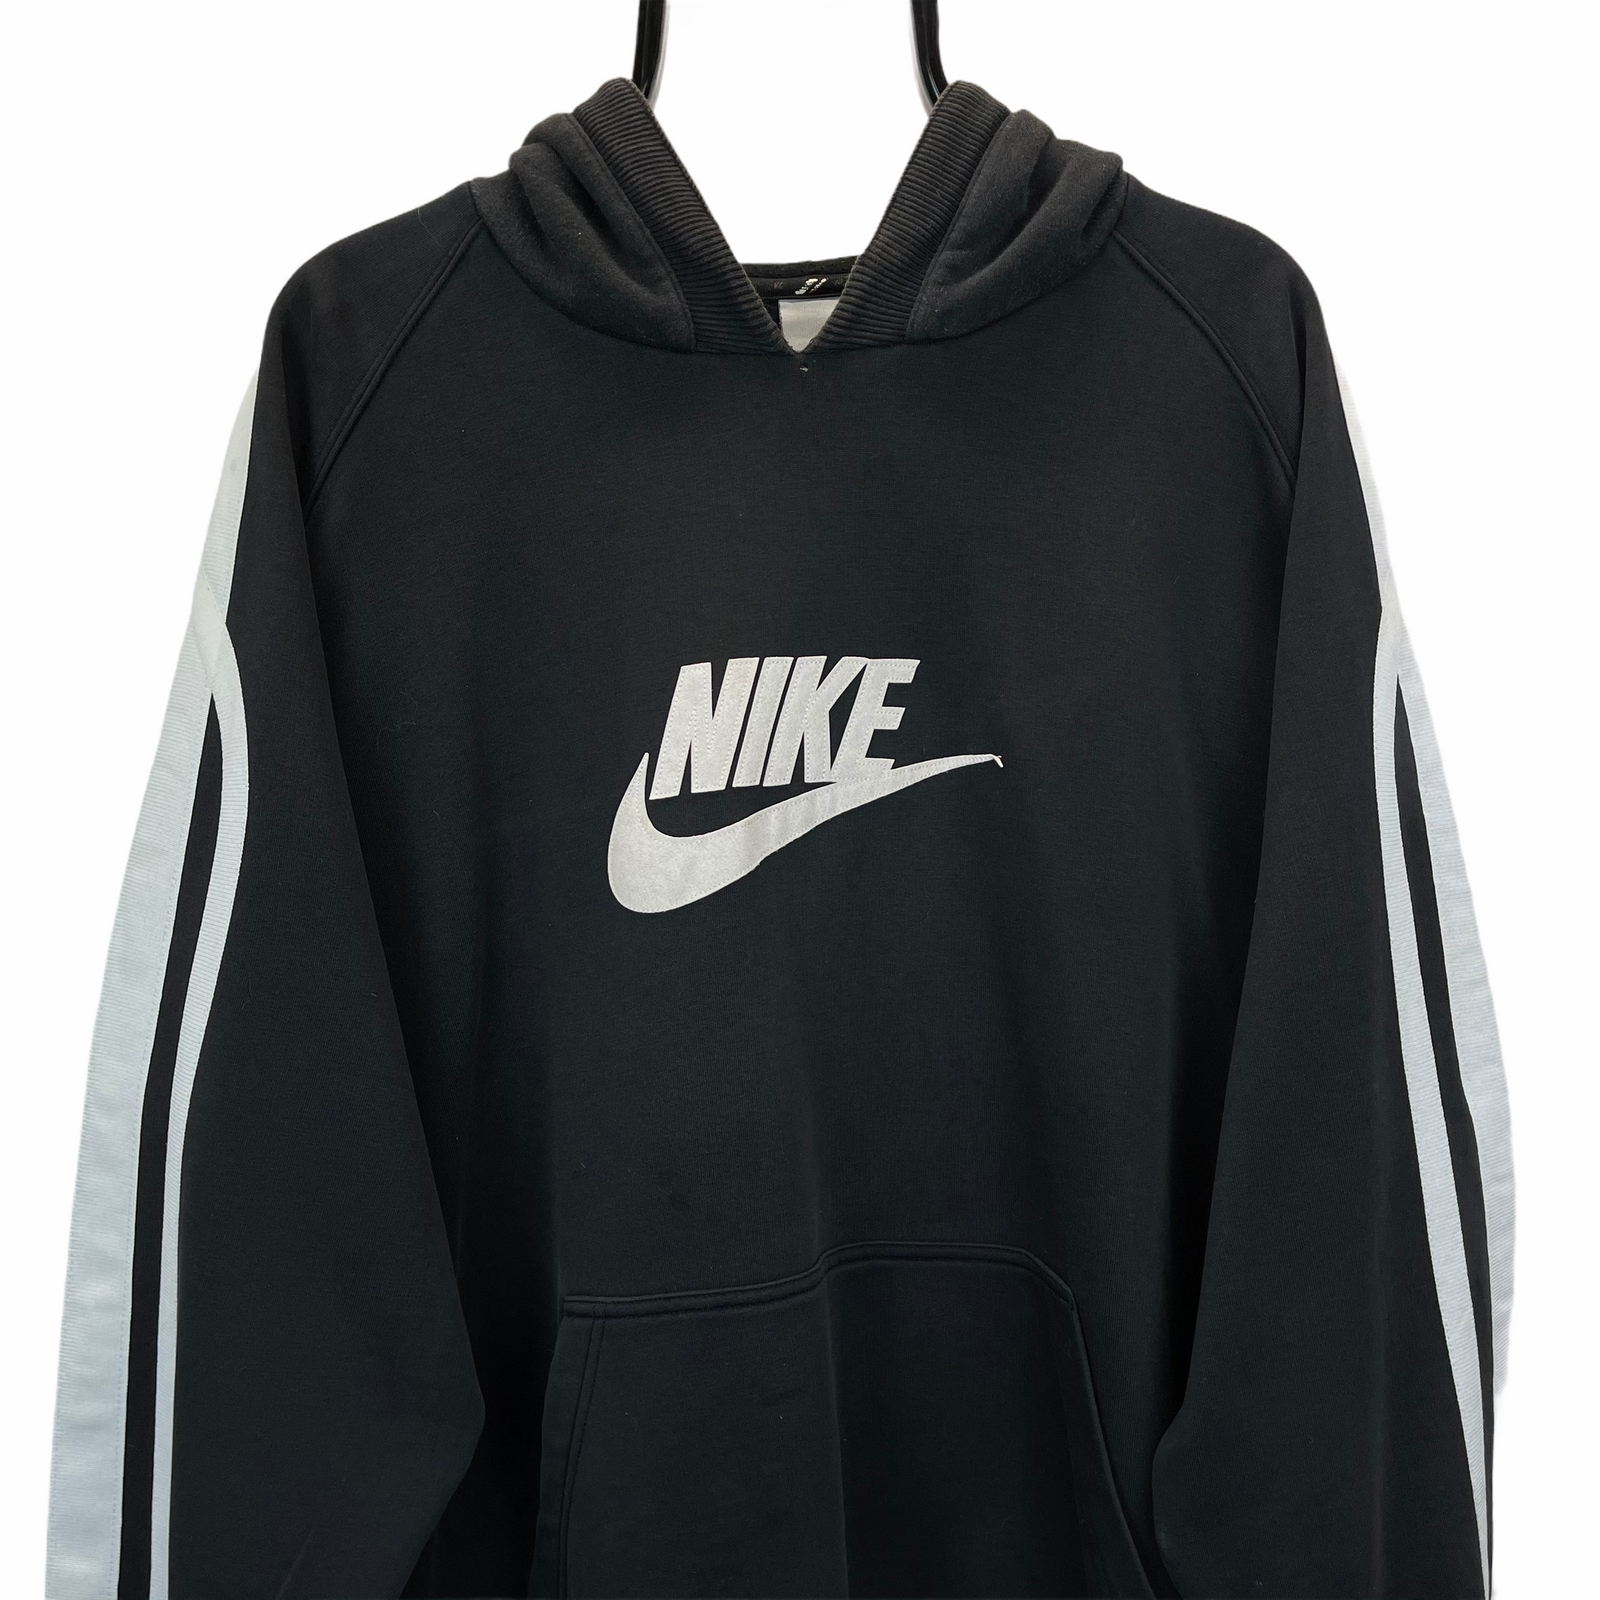 Nike Sweatshirts - Vintique Clothing